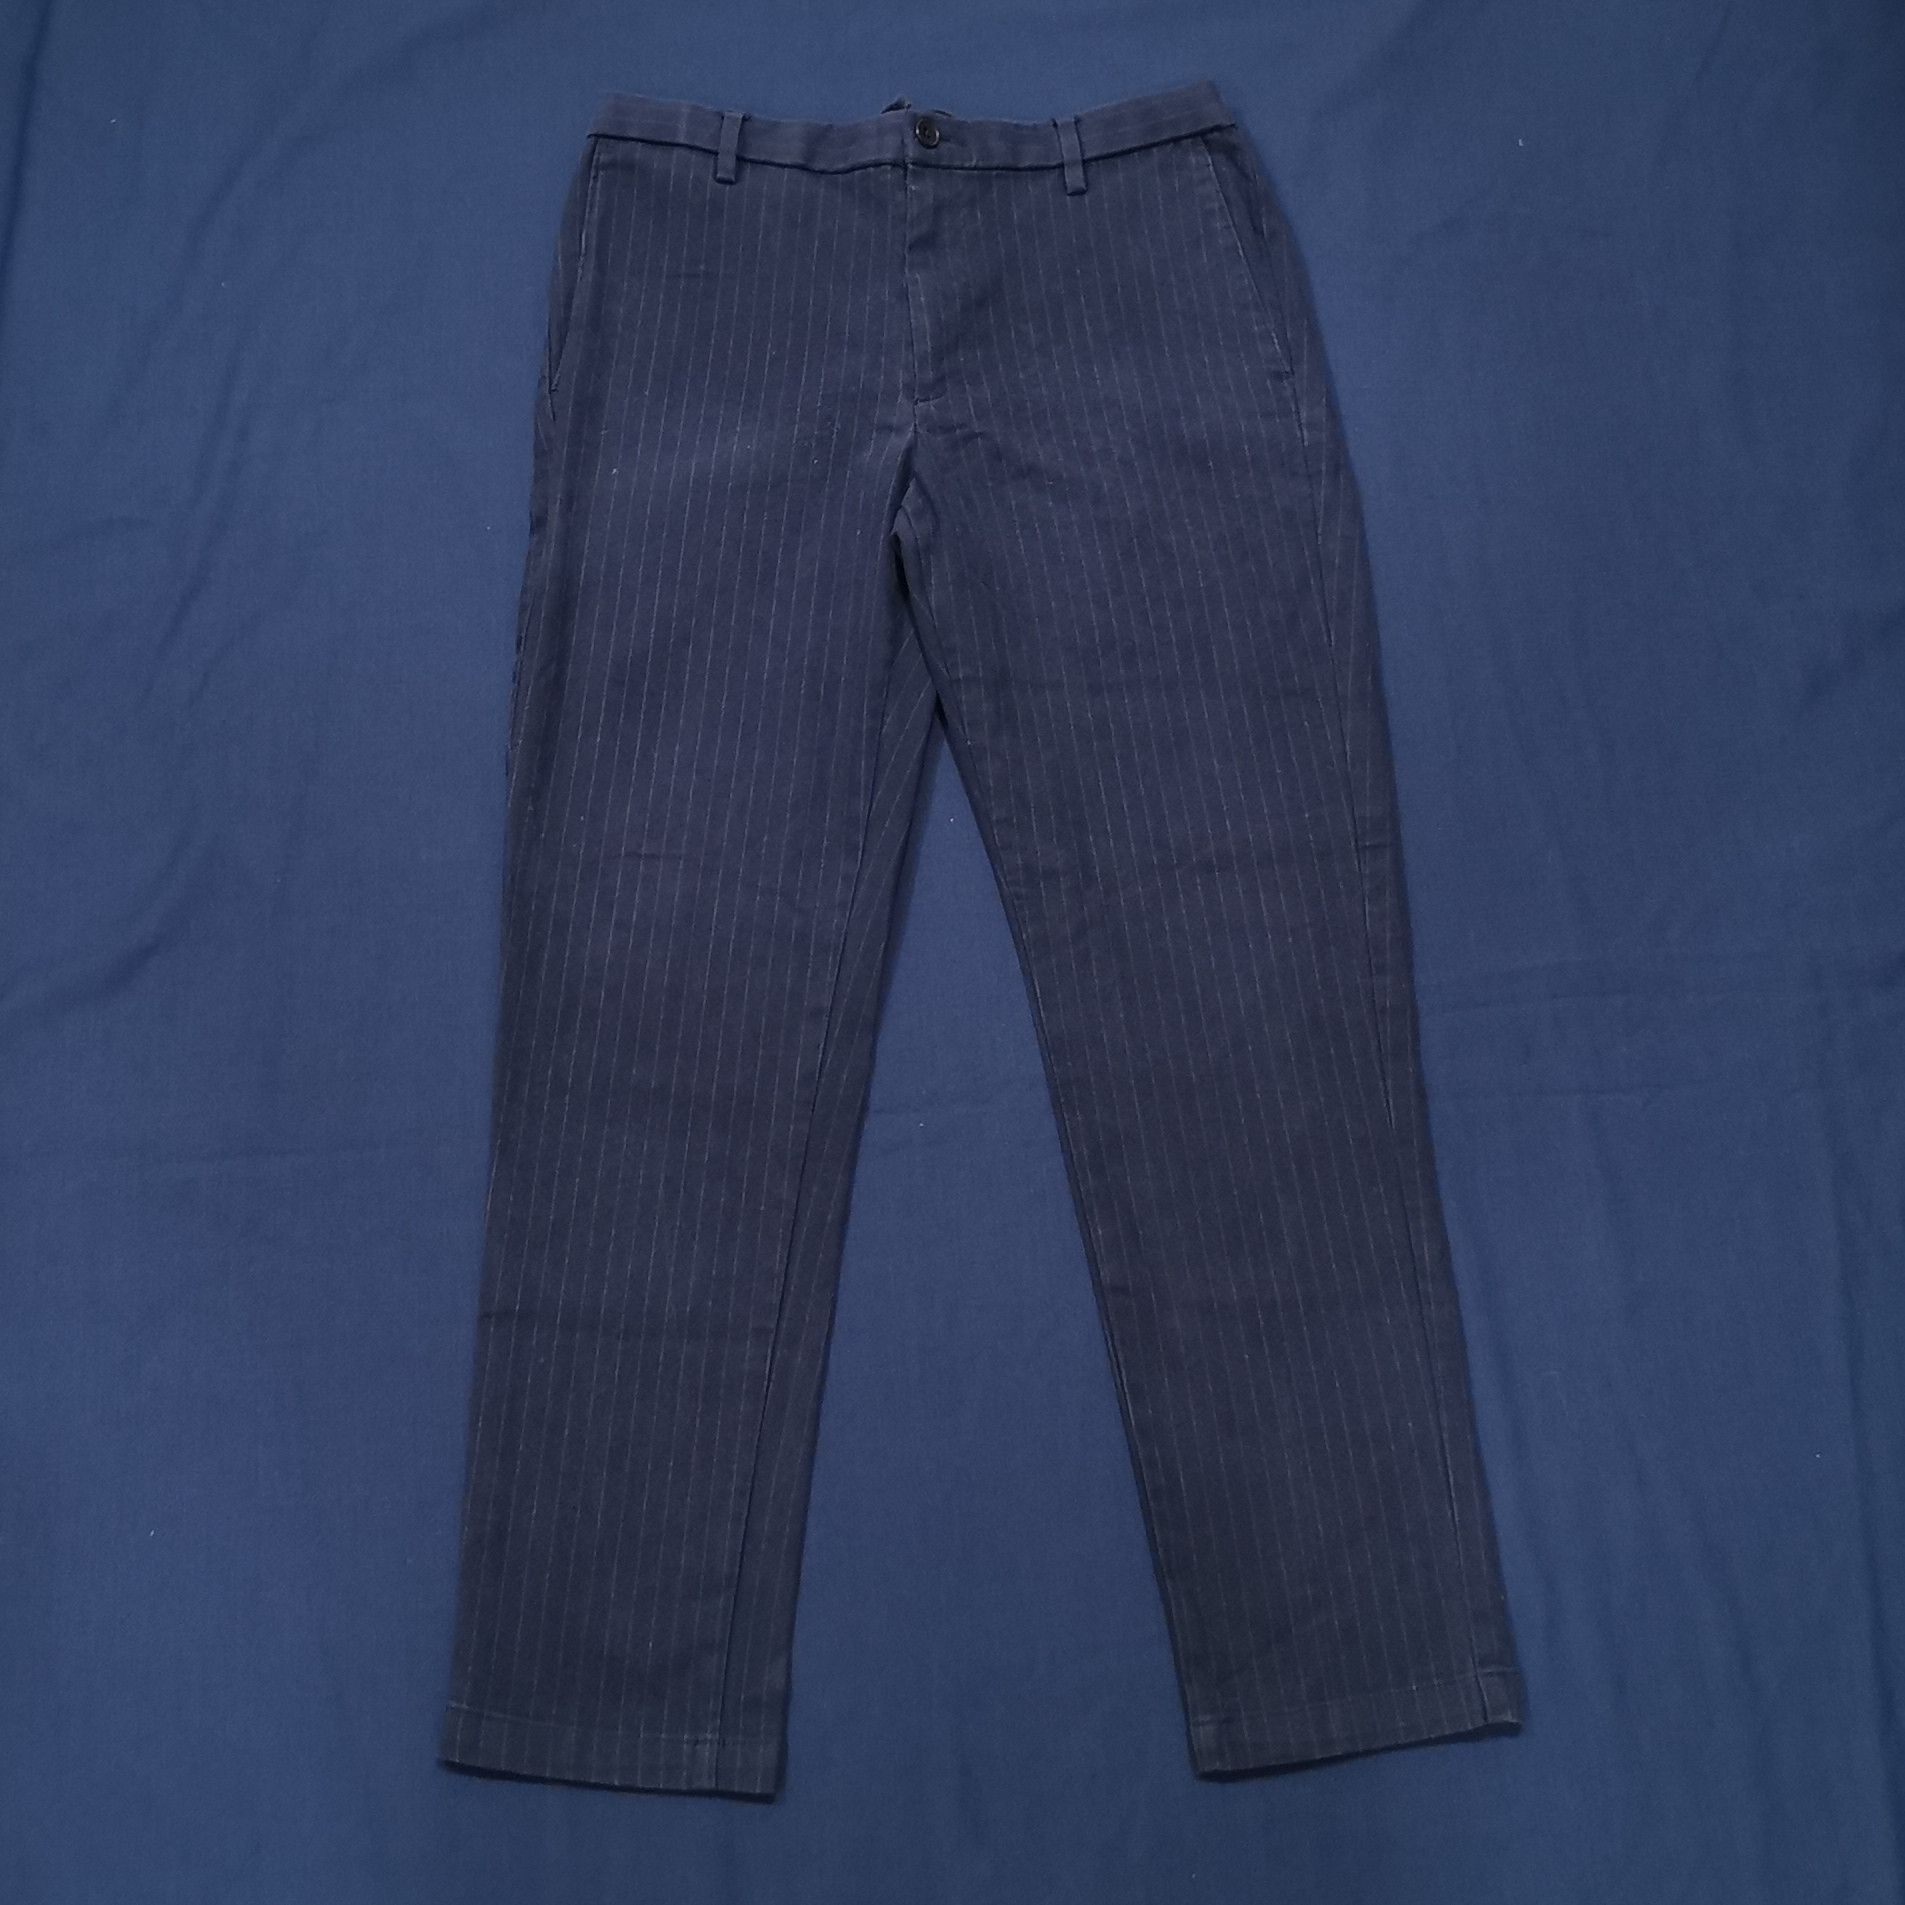 Uniqlo Casual Stripe Style Pants - 1